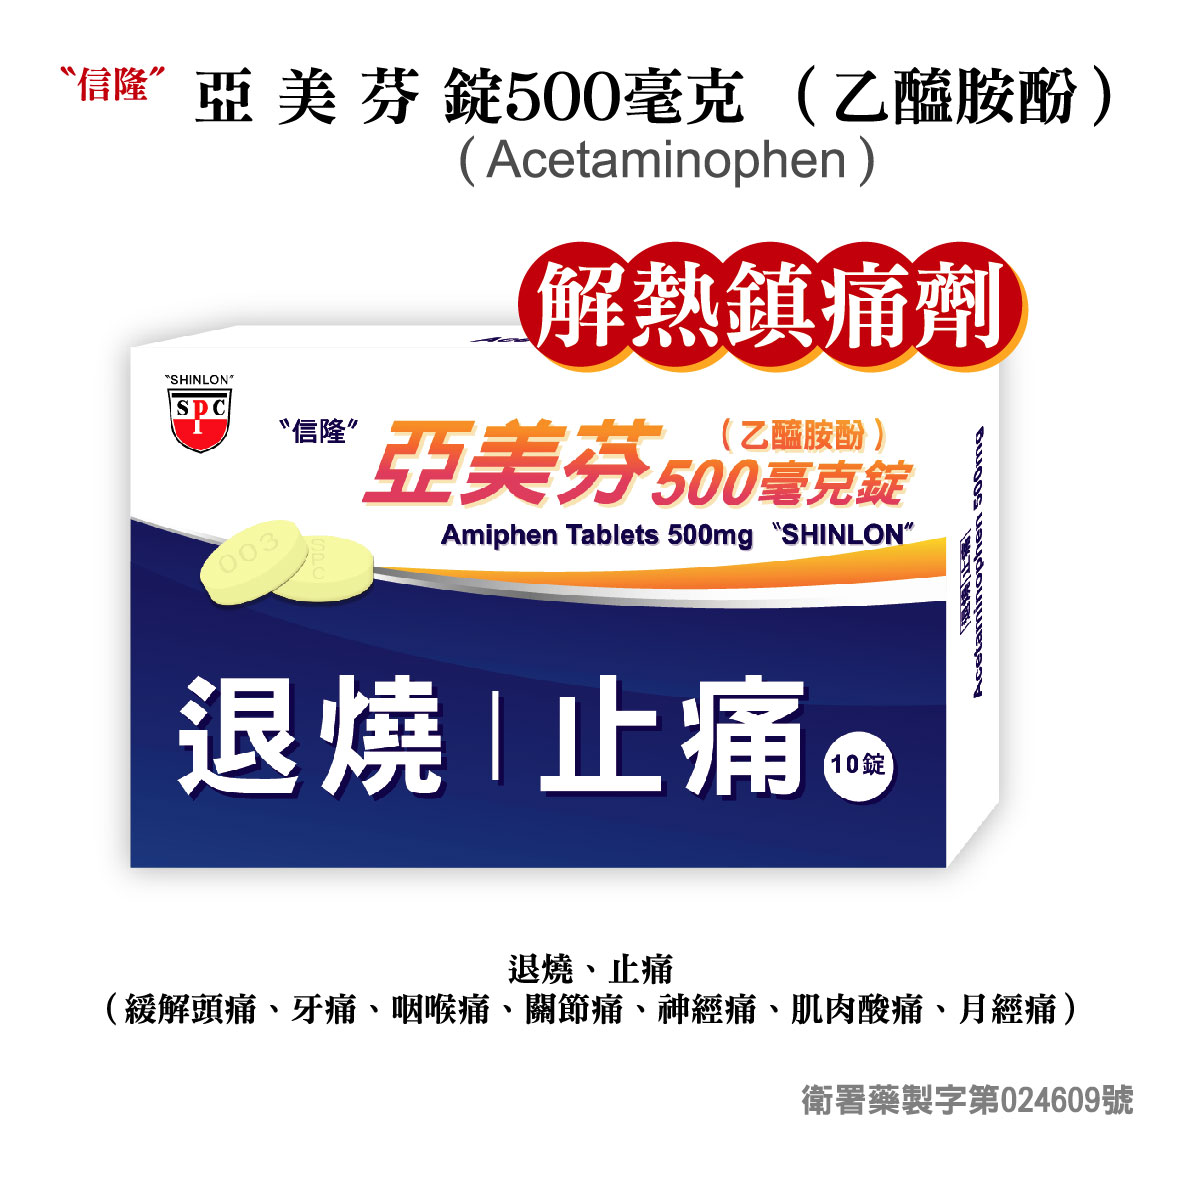 Amiphen 500mg Tablets Acetaminophen 500mg